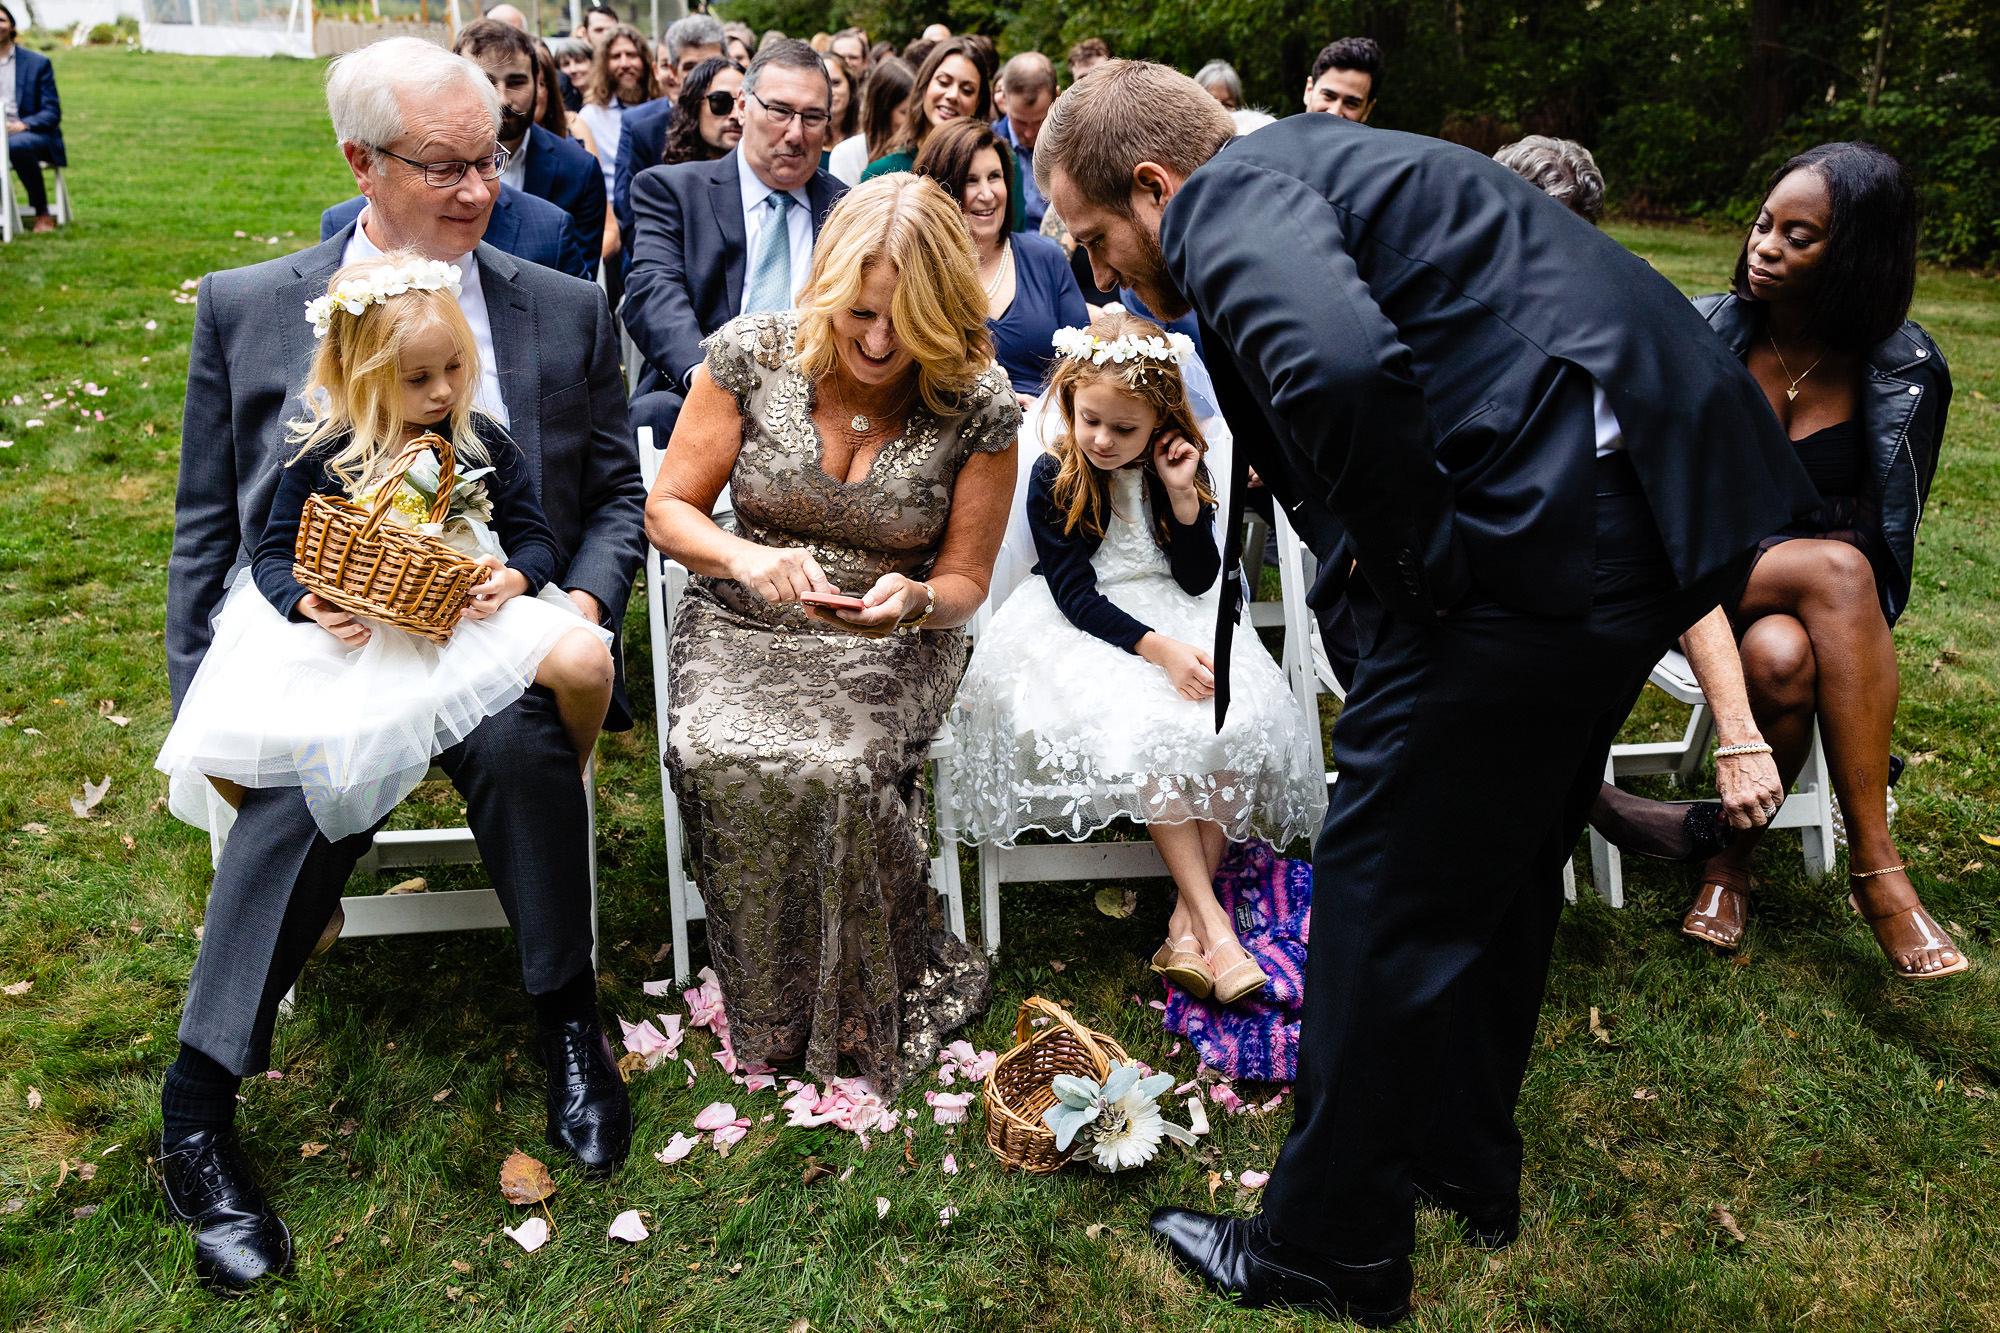 A wedding ceremony at Arrowheads Estate in Cape Neddick, Maine